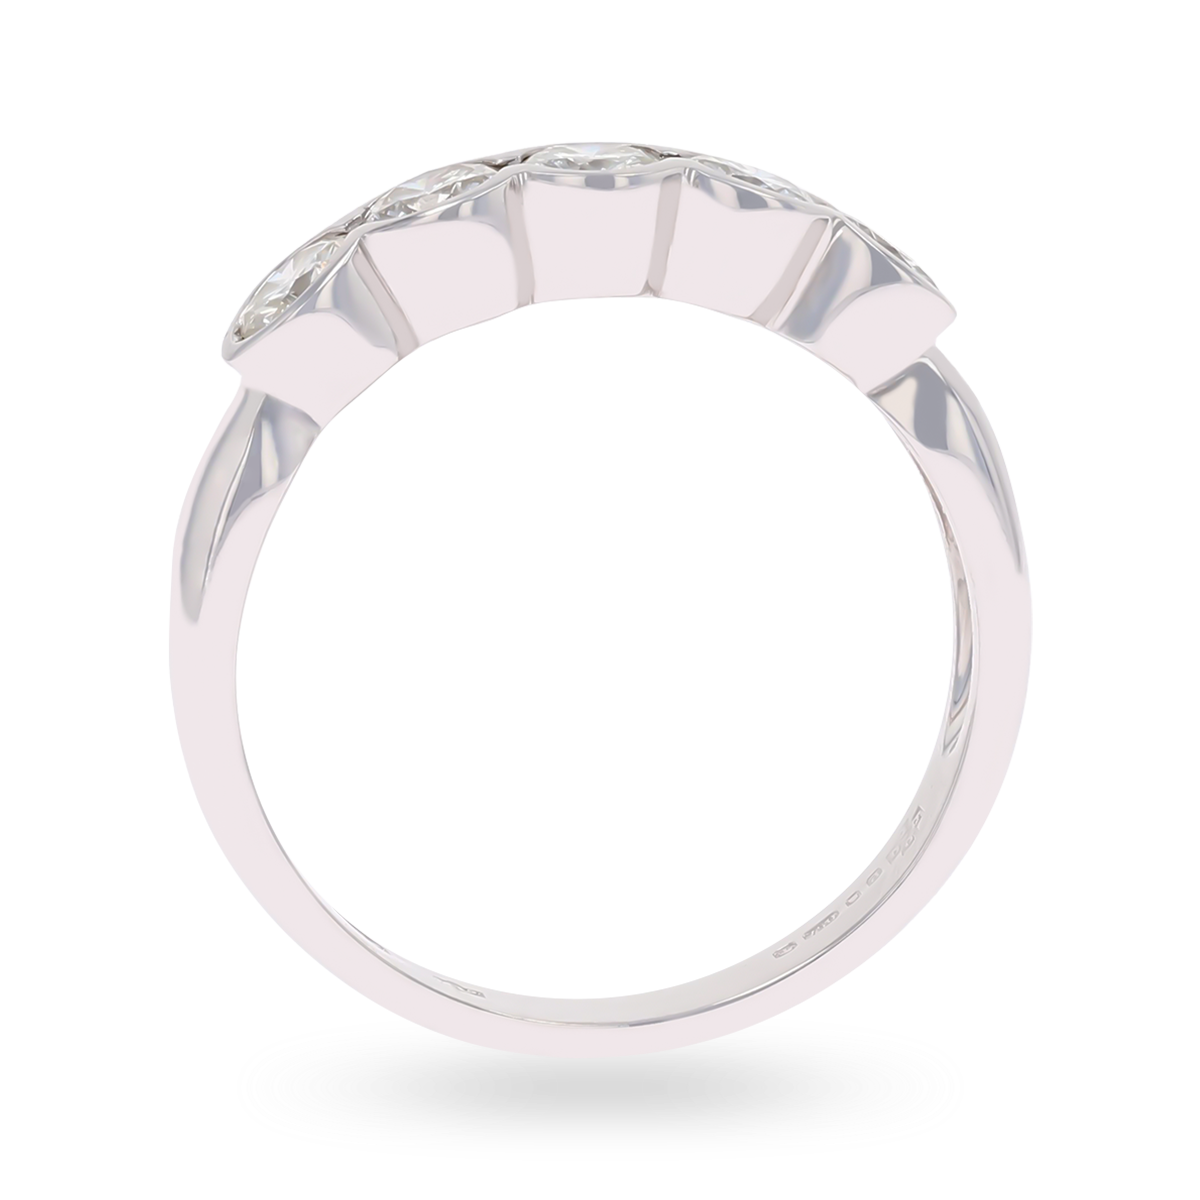 18ct White Gold Round Brilliant Cut 0.86cts Diamond Bezel Set Eternity Ring